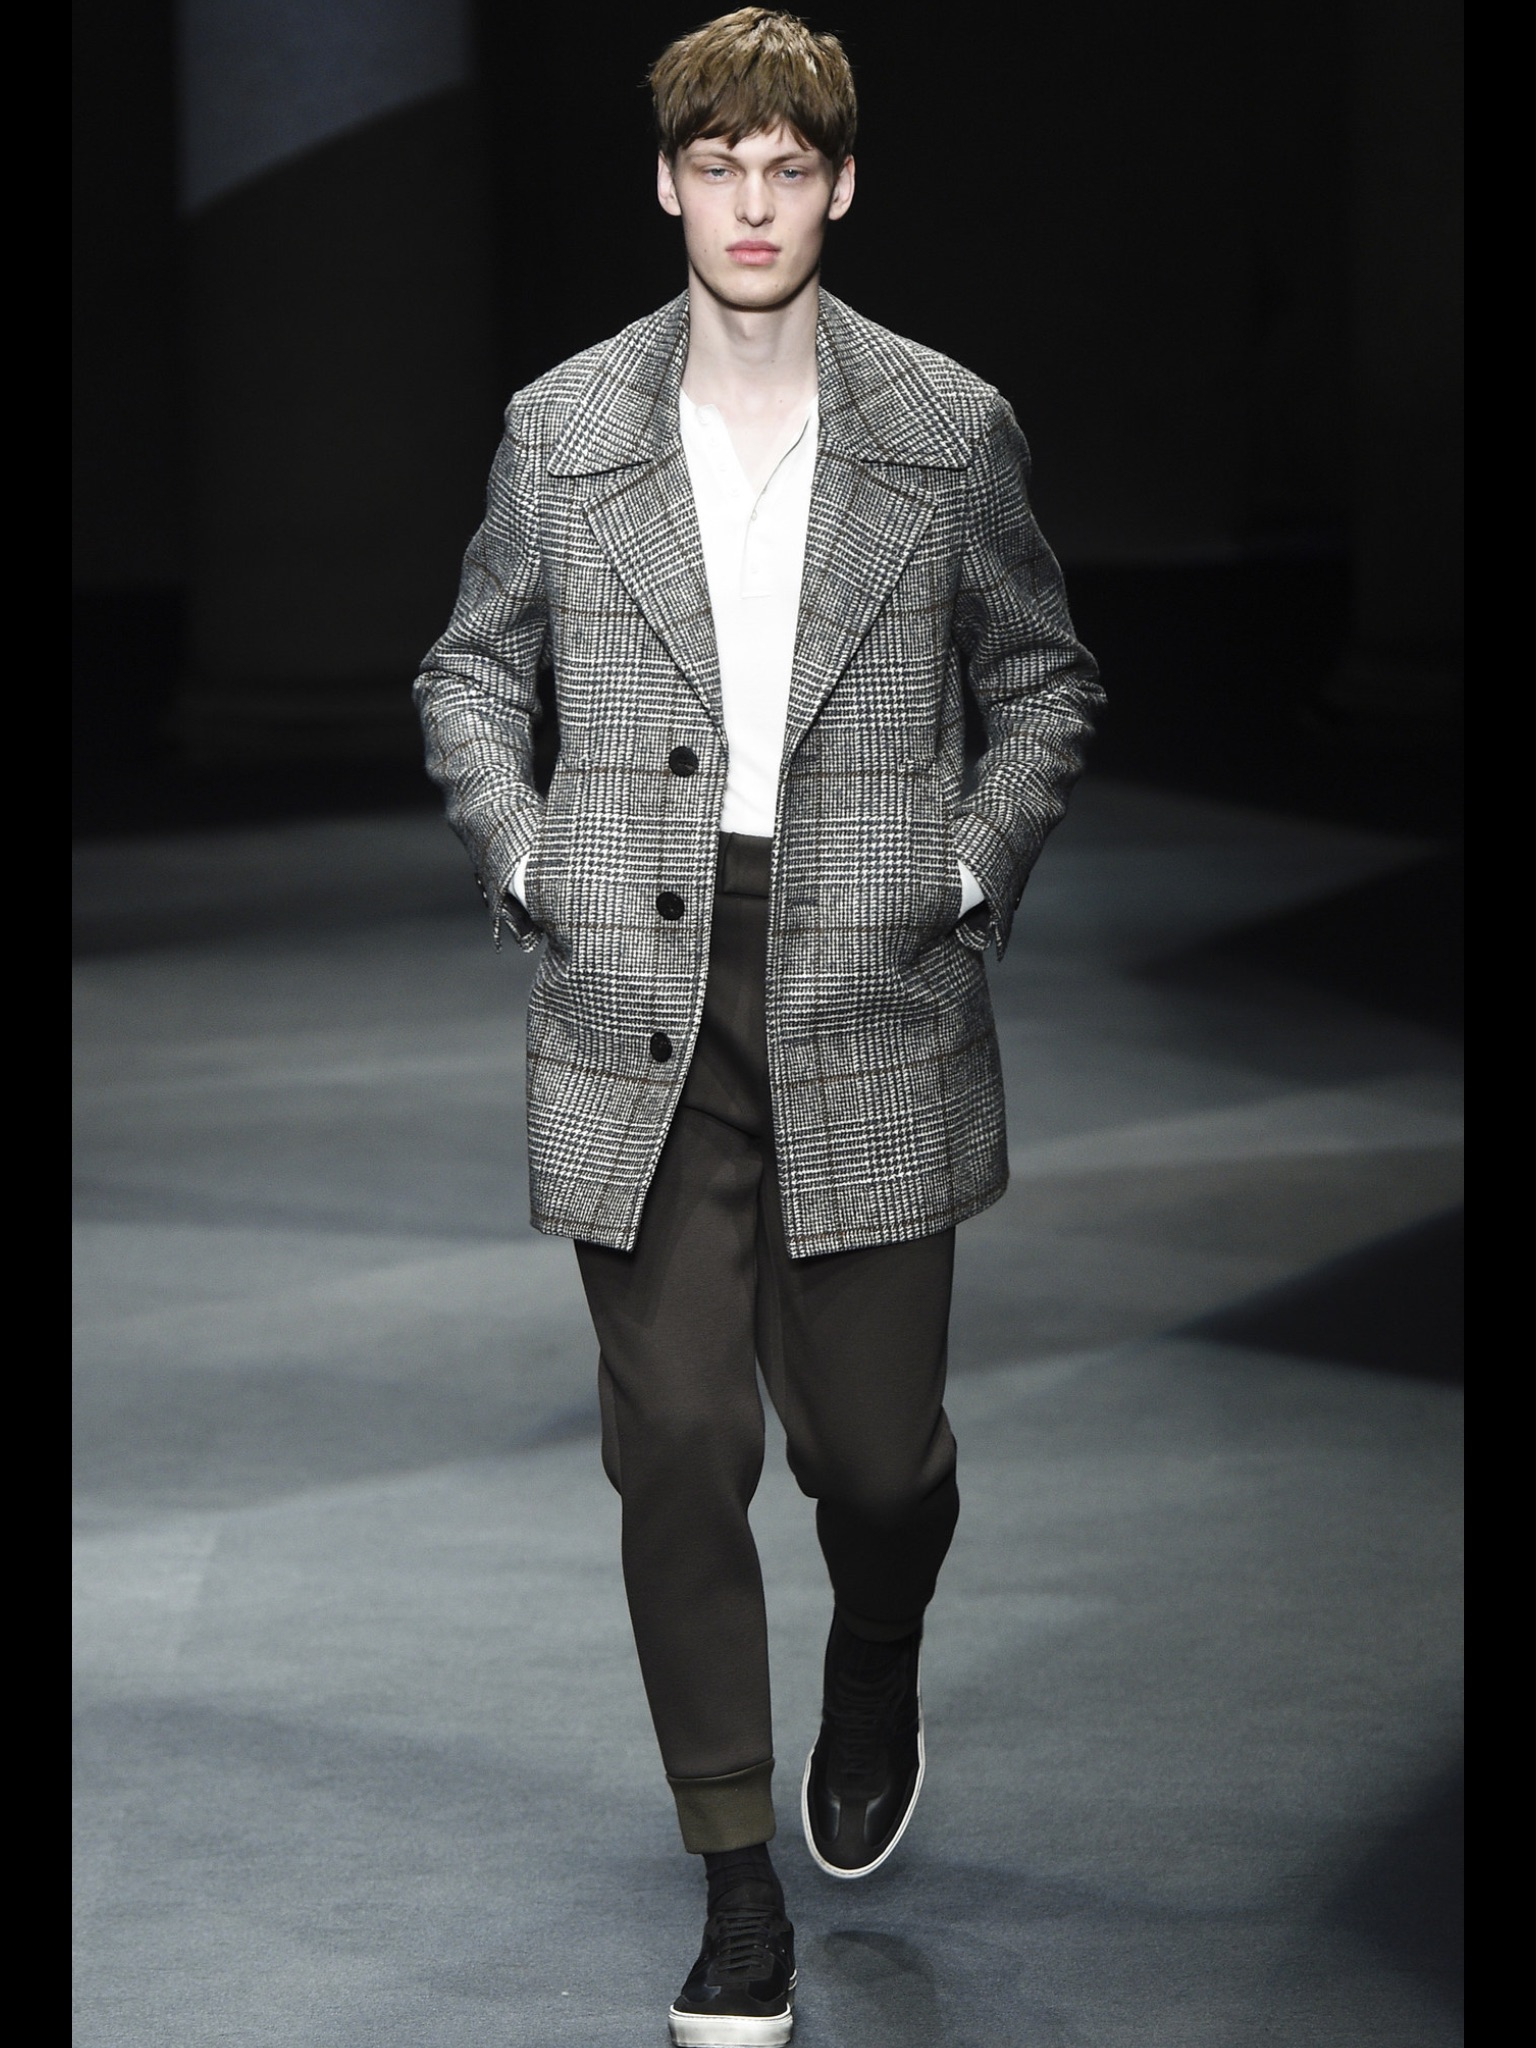 Milan Menswear Shows Highlights - Autumn/Winter 2016 - CLOTHES MAKE THE MAN